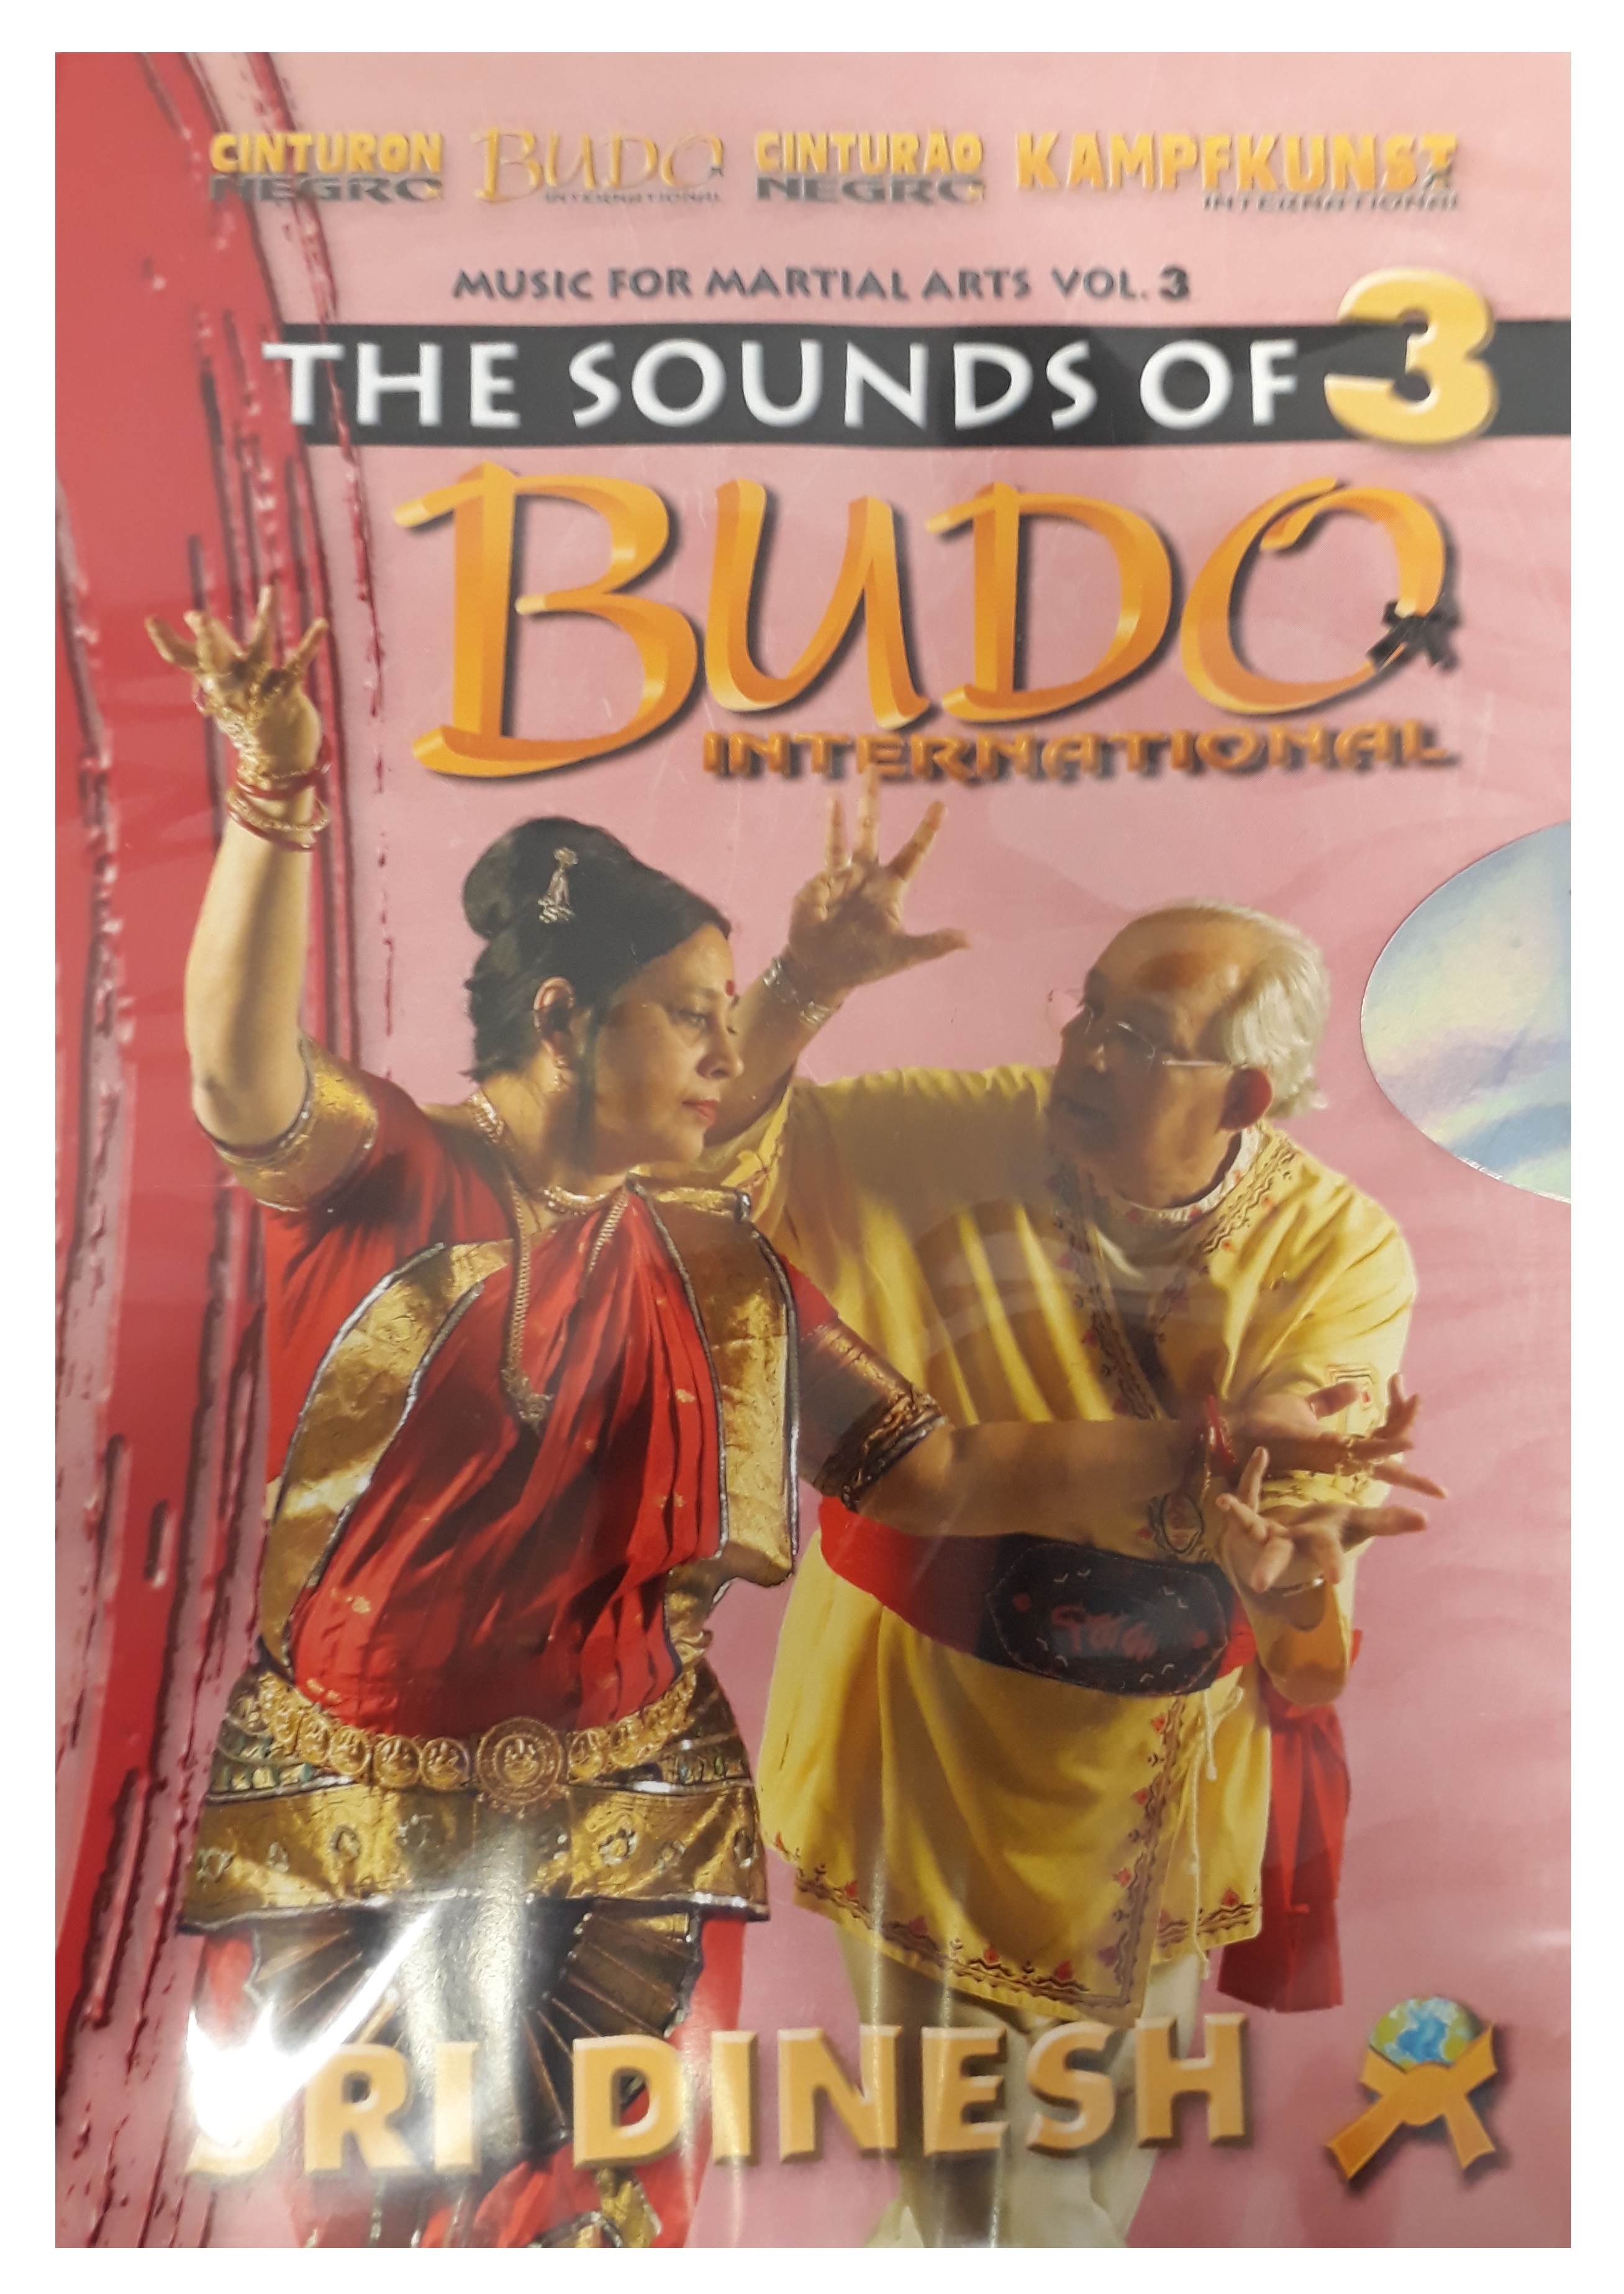 CD The Sounds of Budo Vol. 3